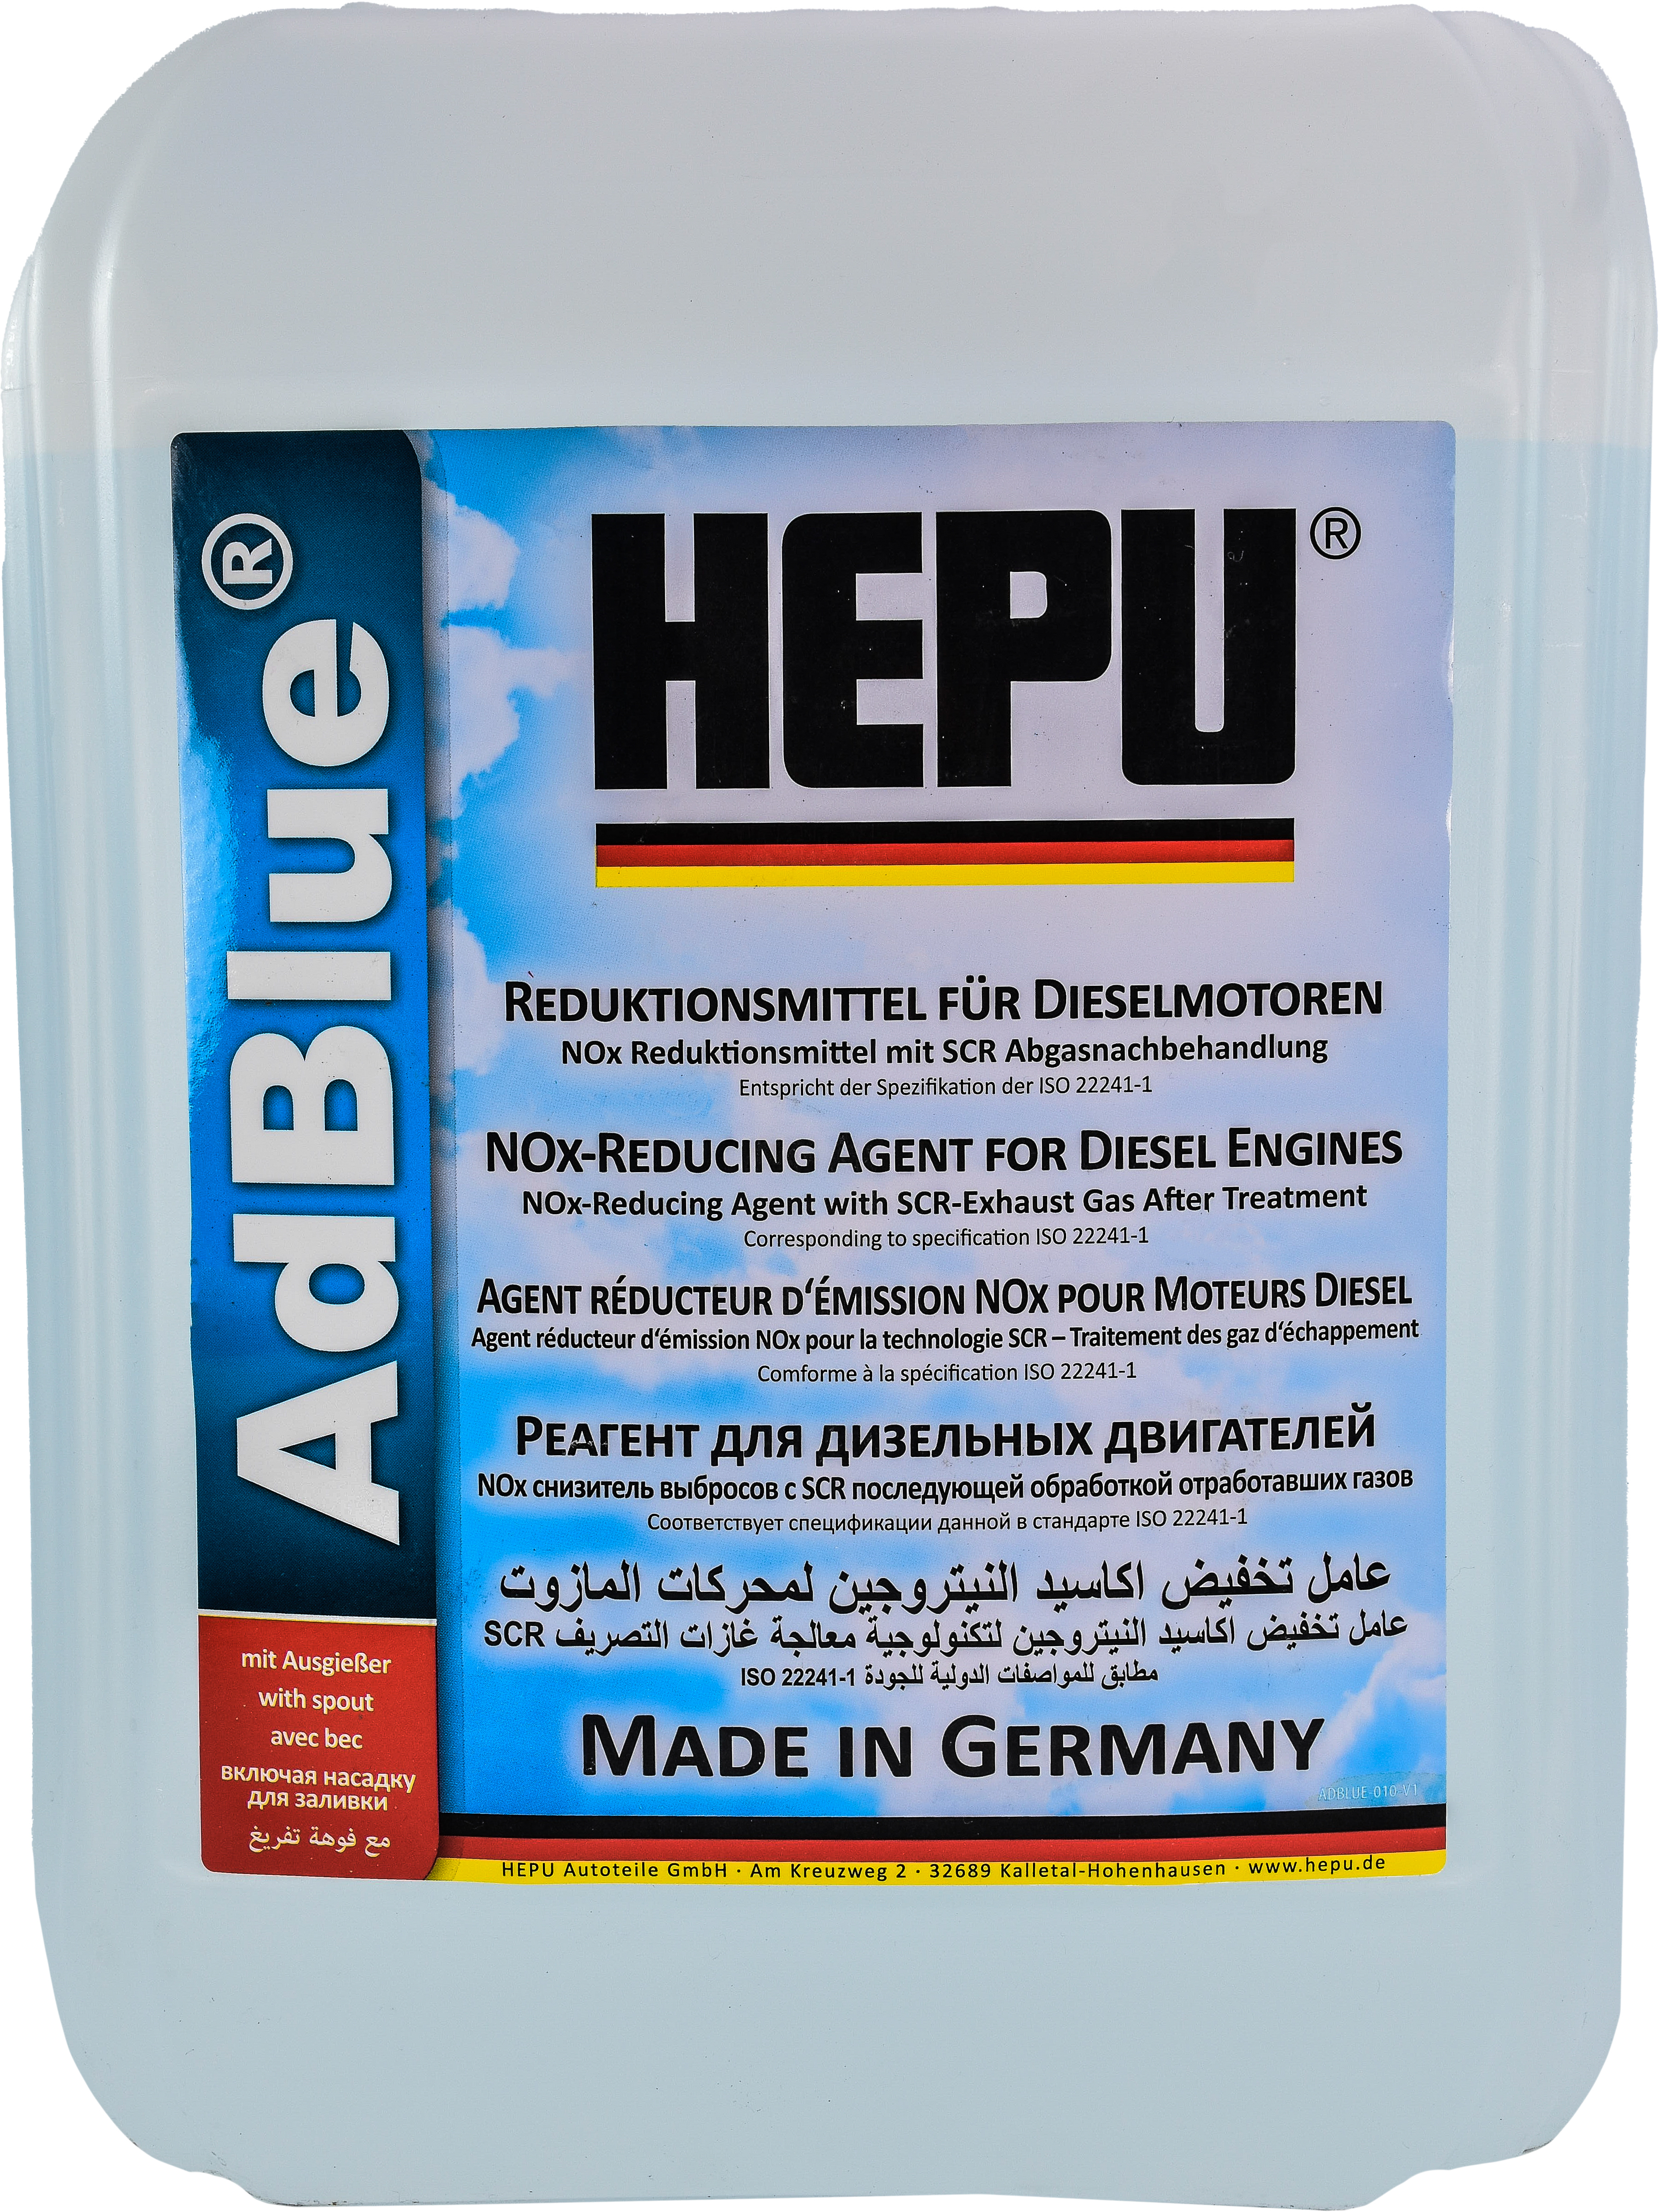 

AdBlue Hepu adblue010